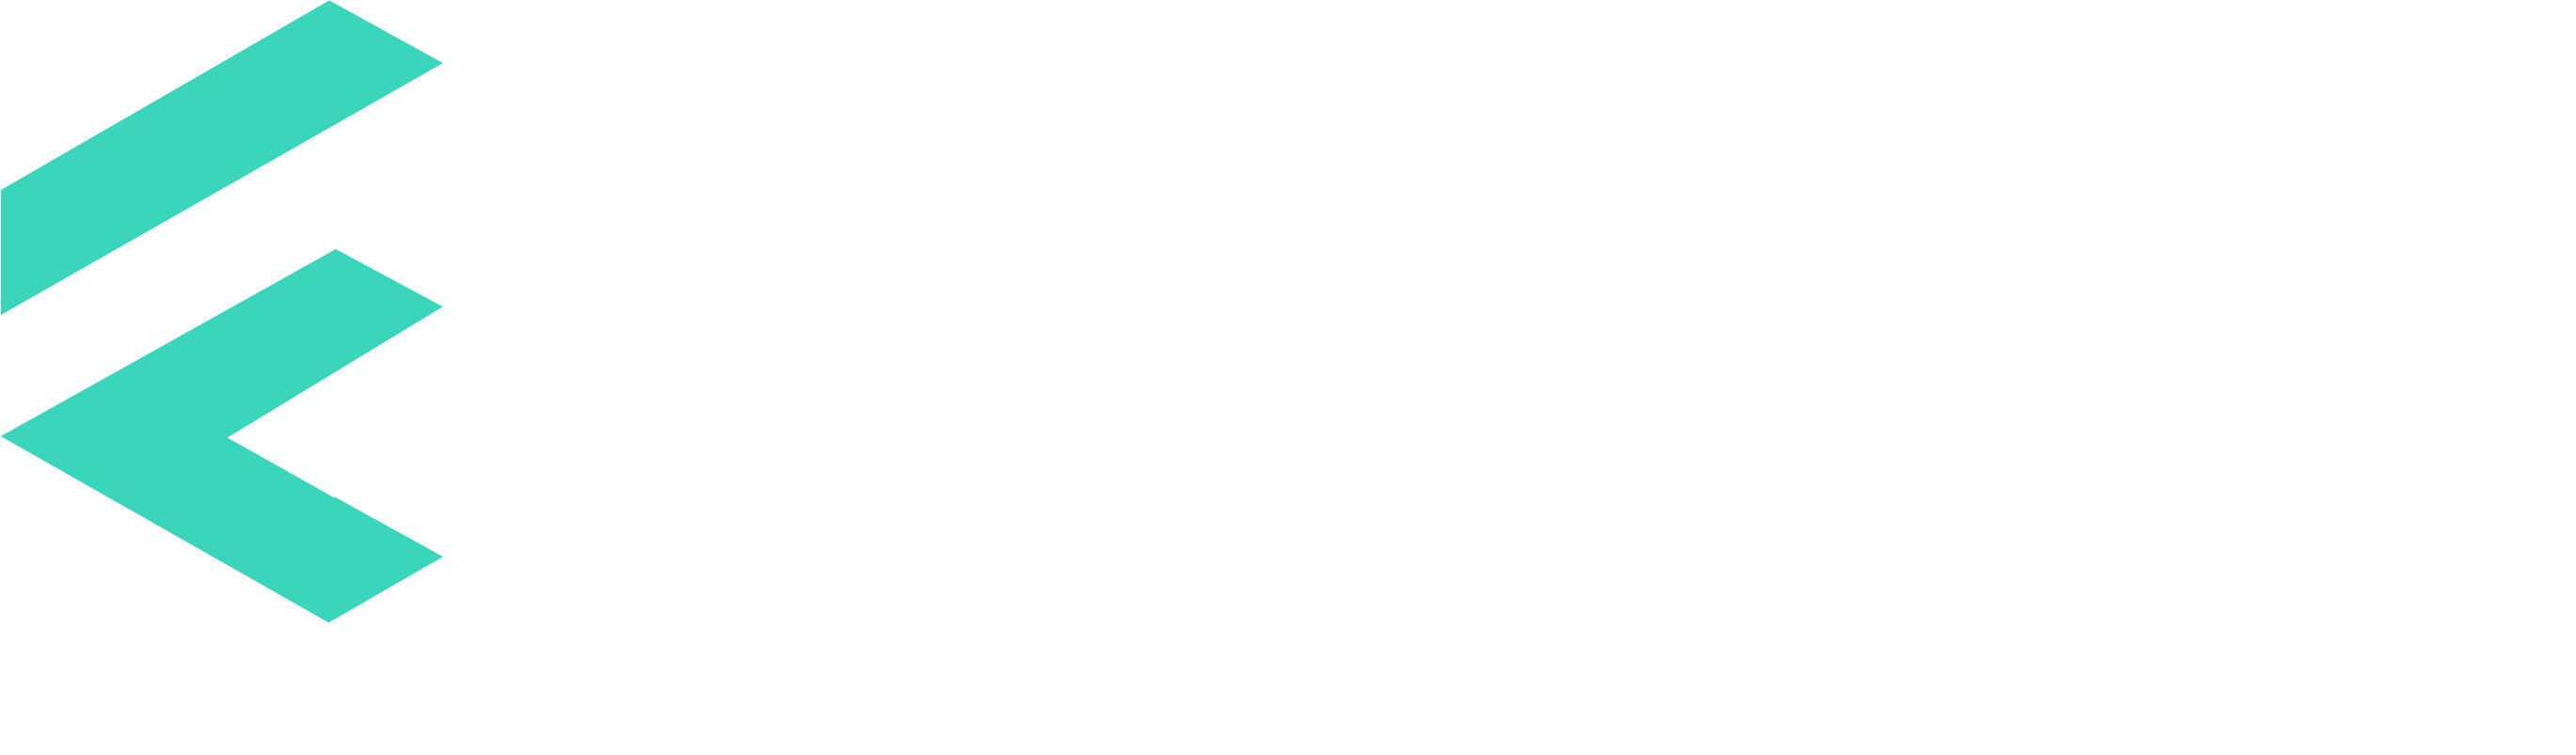 FigBytes_White_logo